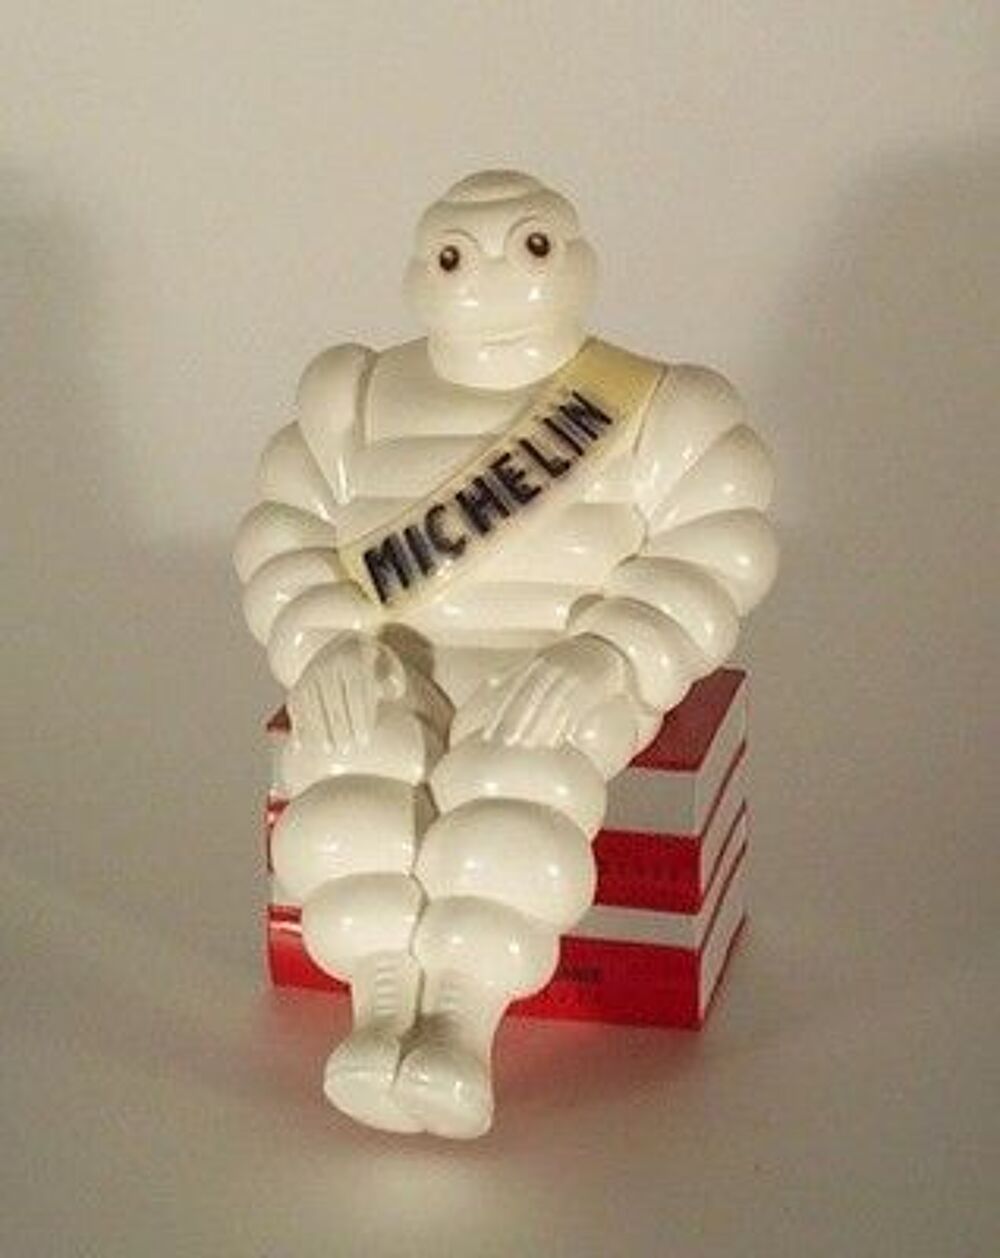 Recherche objets Bibendum Michelin. 